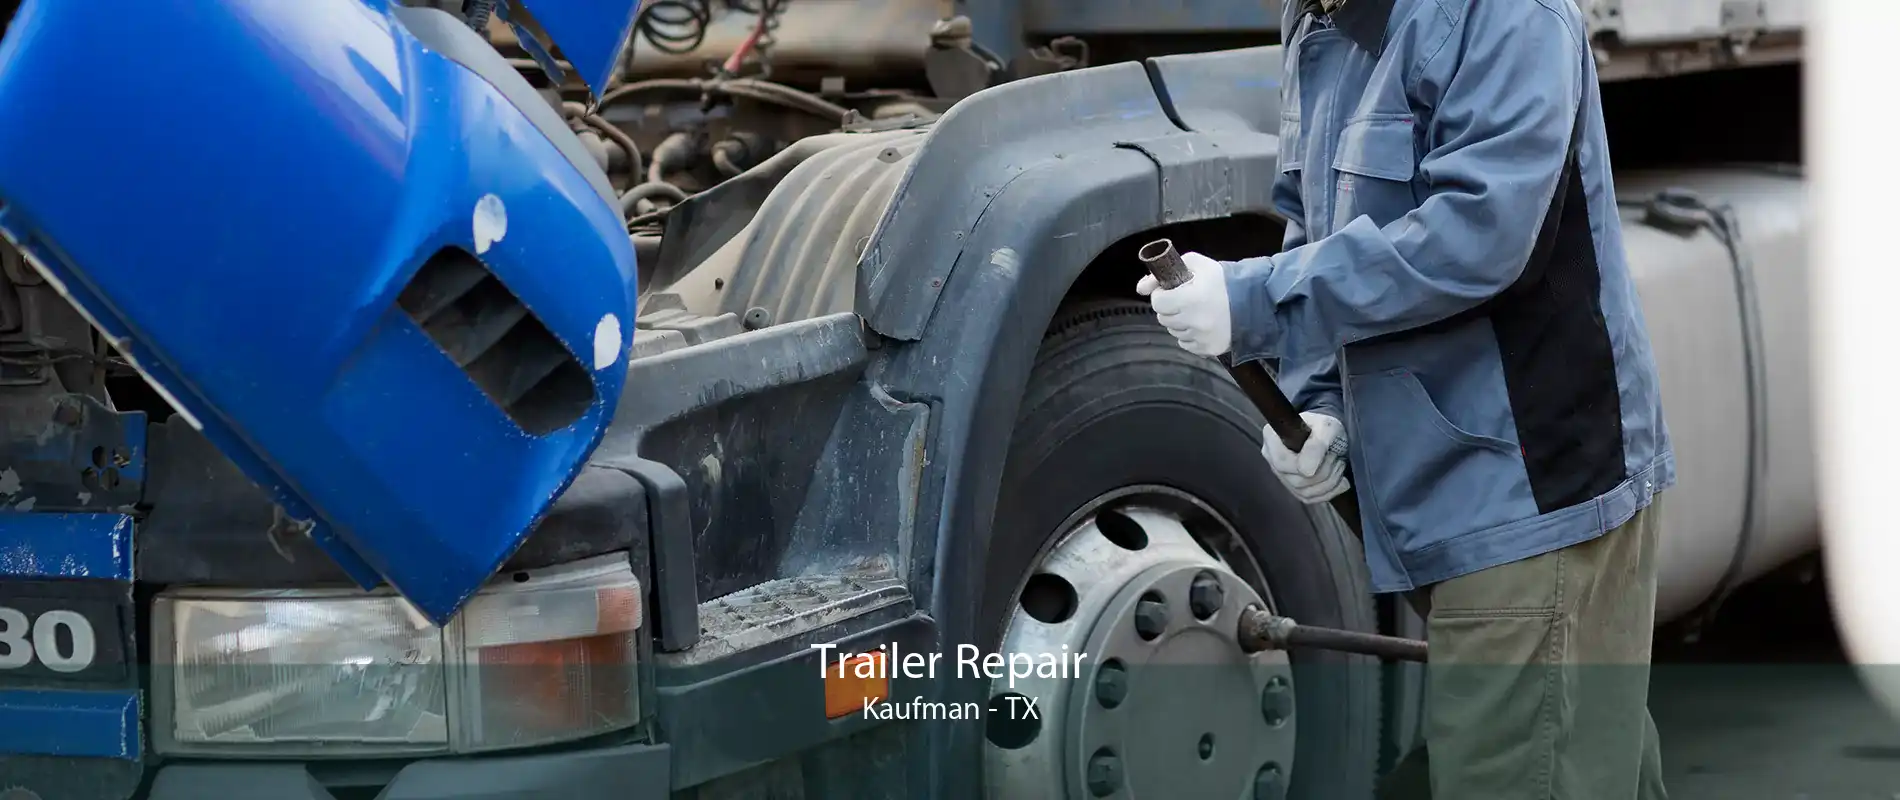 Trailer Repair Kaufman - TX